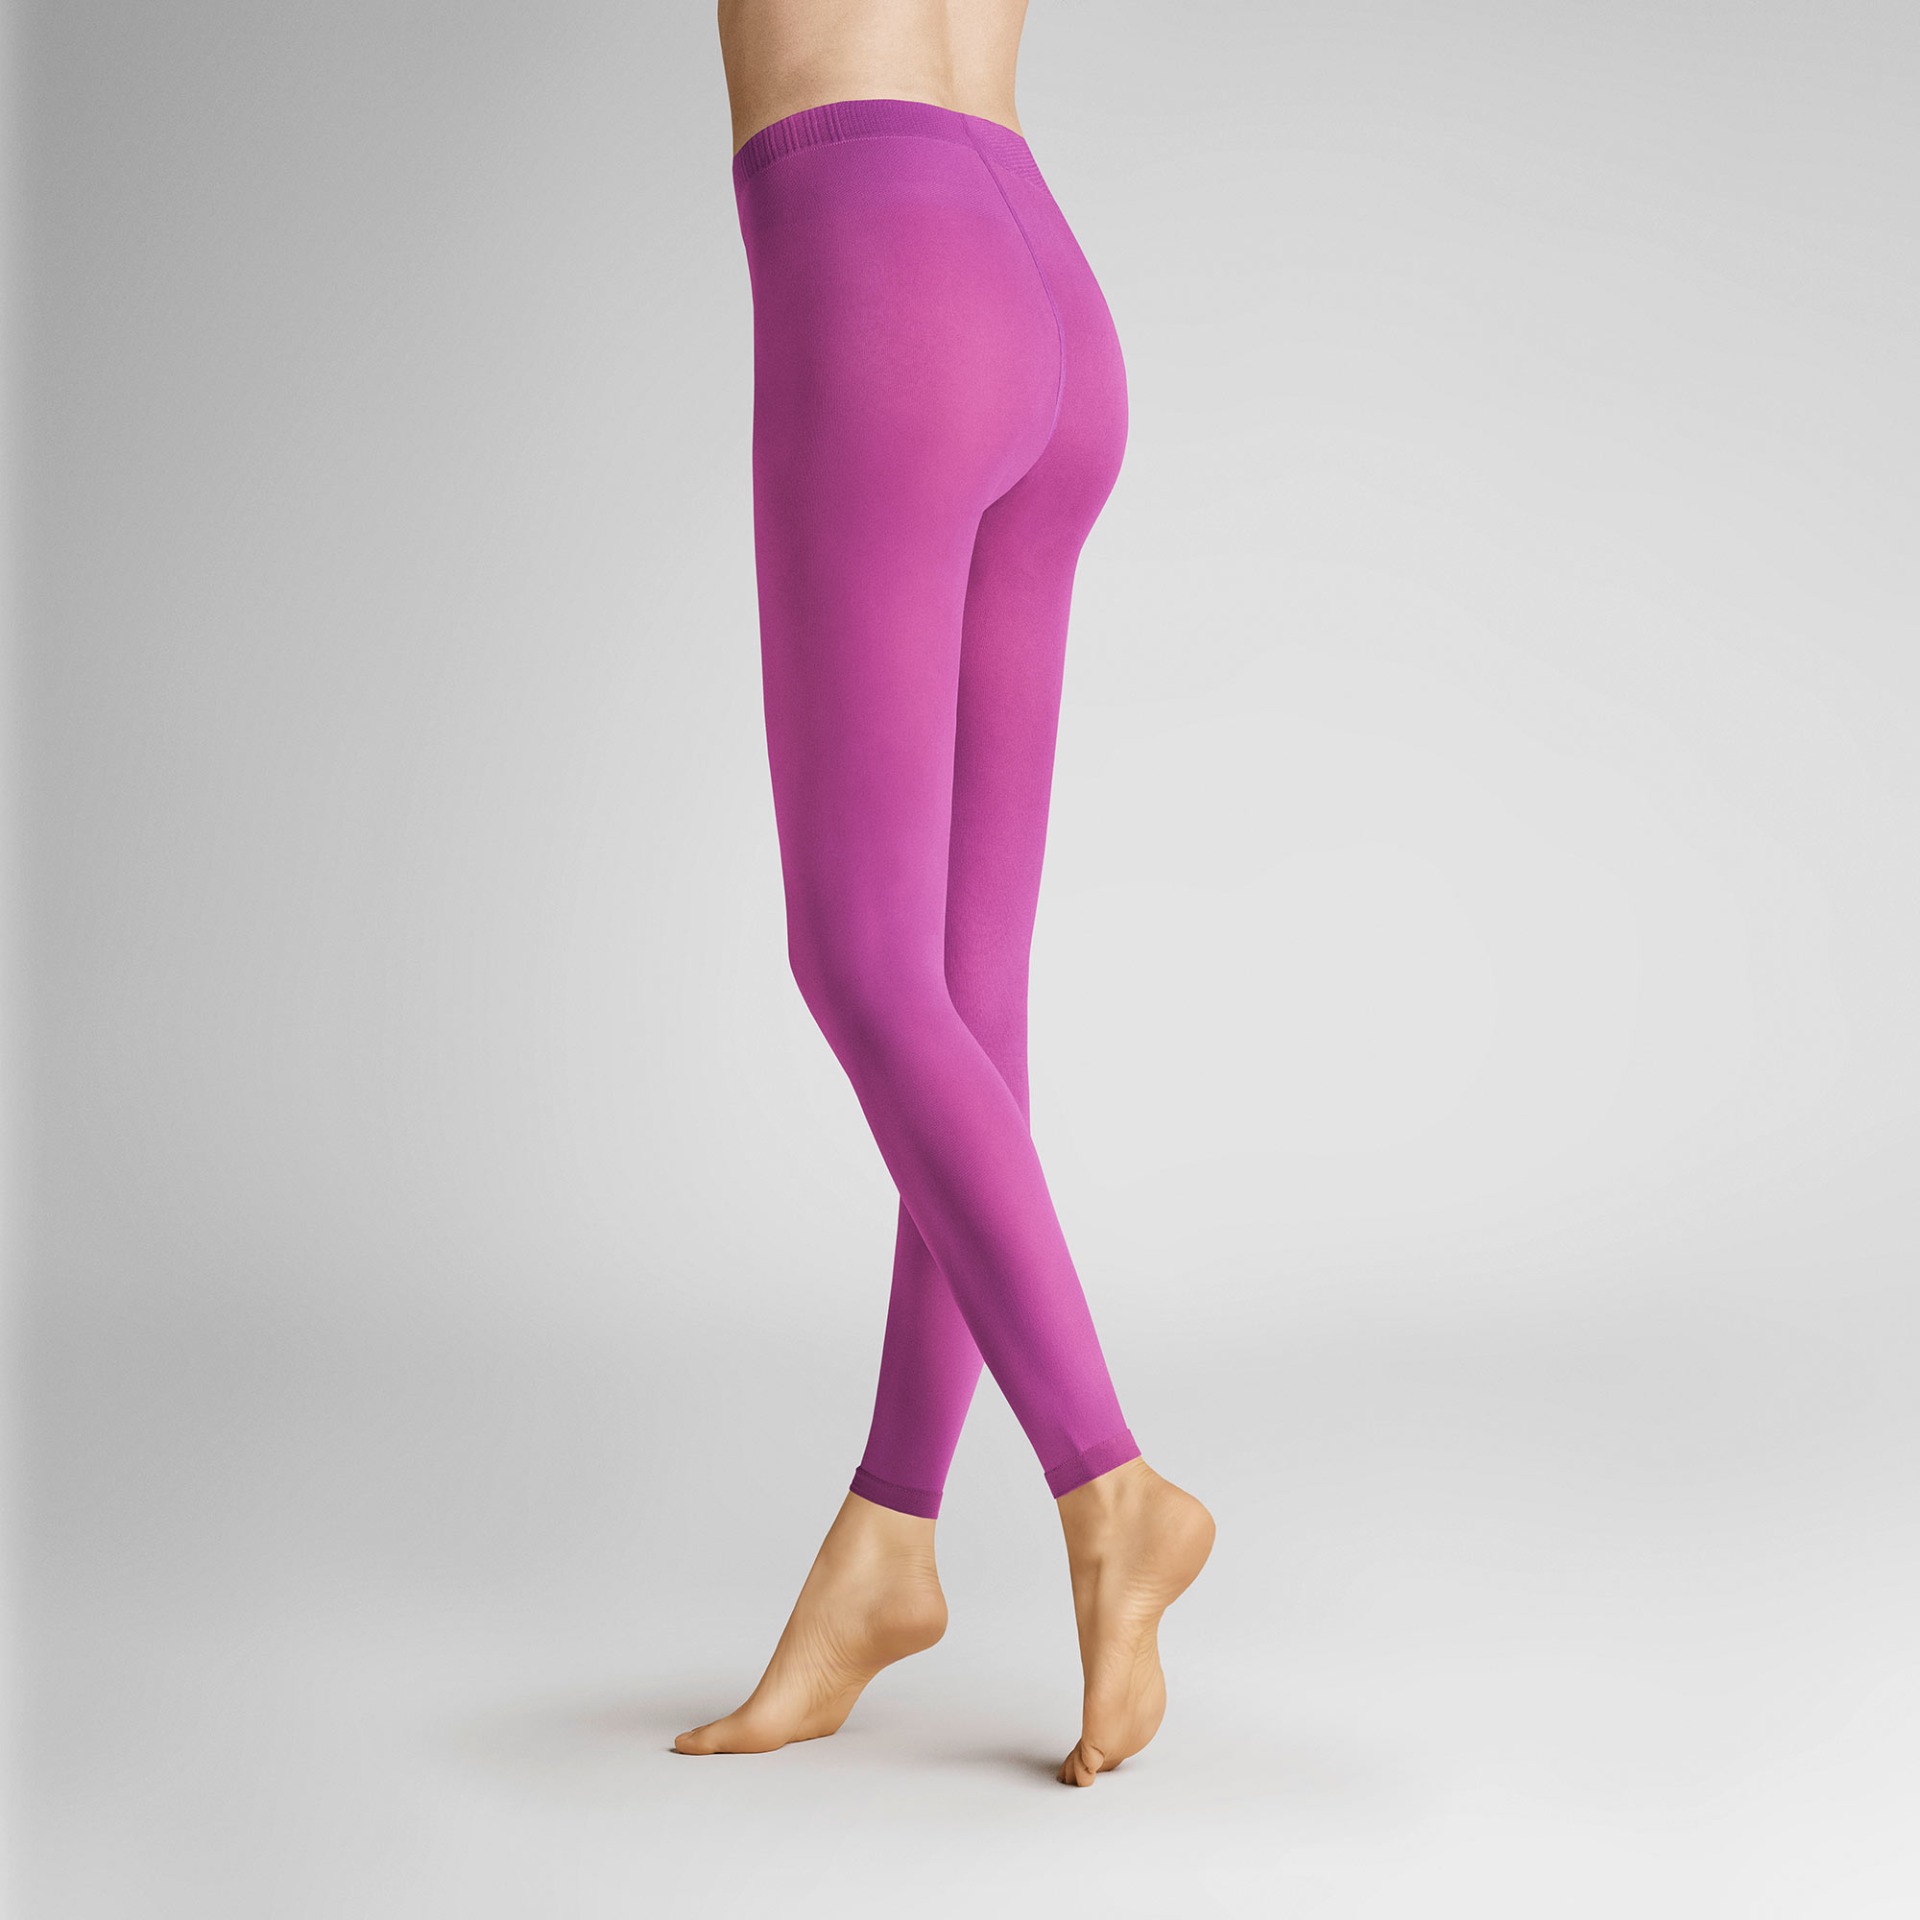 HUDSON Damen MICRO 50 -  38/40 - Semi-blickdichte Leggings mit ebenmäßiger Optik - Fuxia 0103 (Pink/Violett)